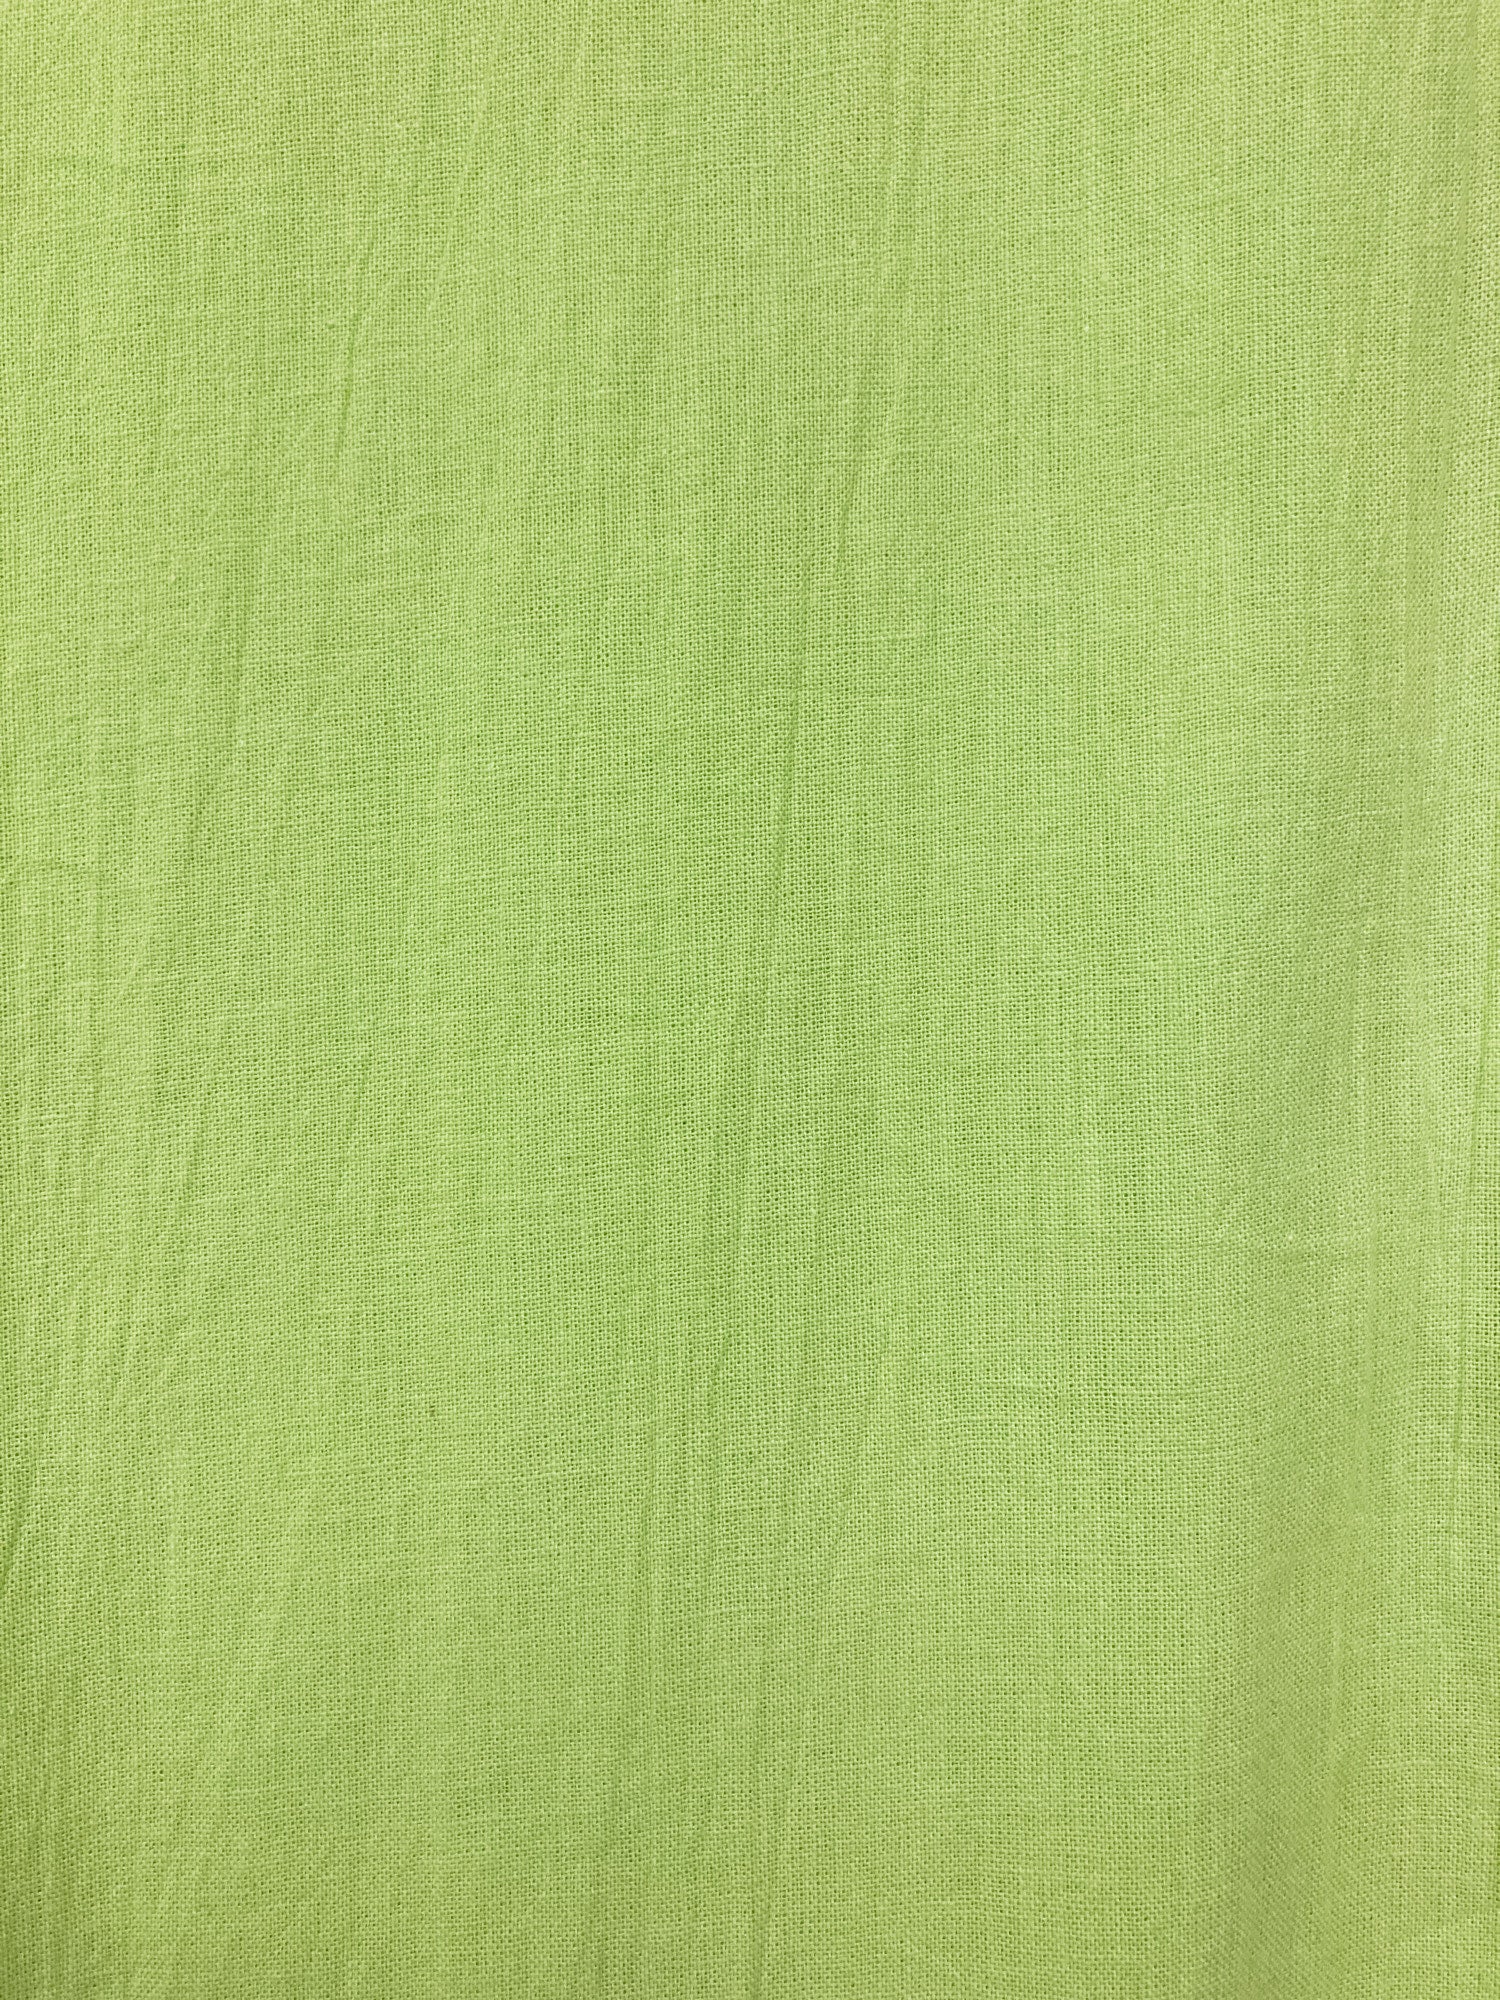 Robe de Chambre Comme des Garcons 1989 fluorescent green cotton scarf or shawl